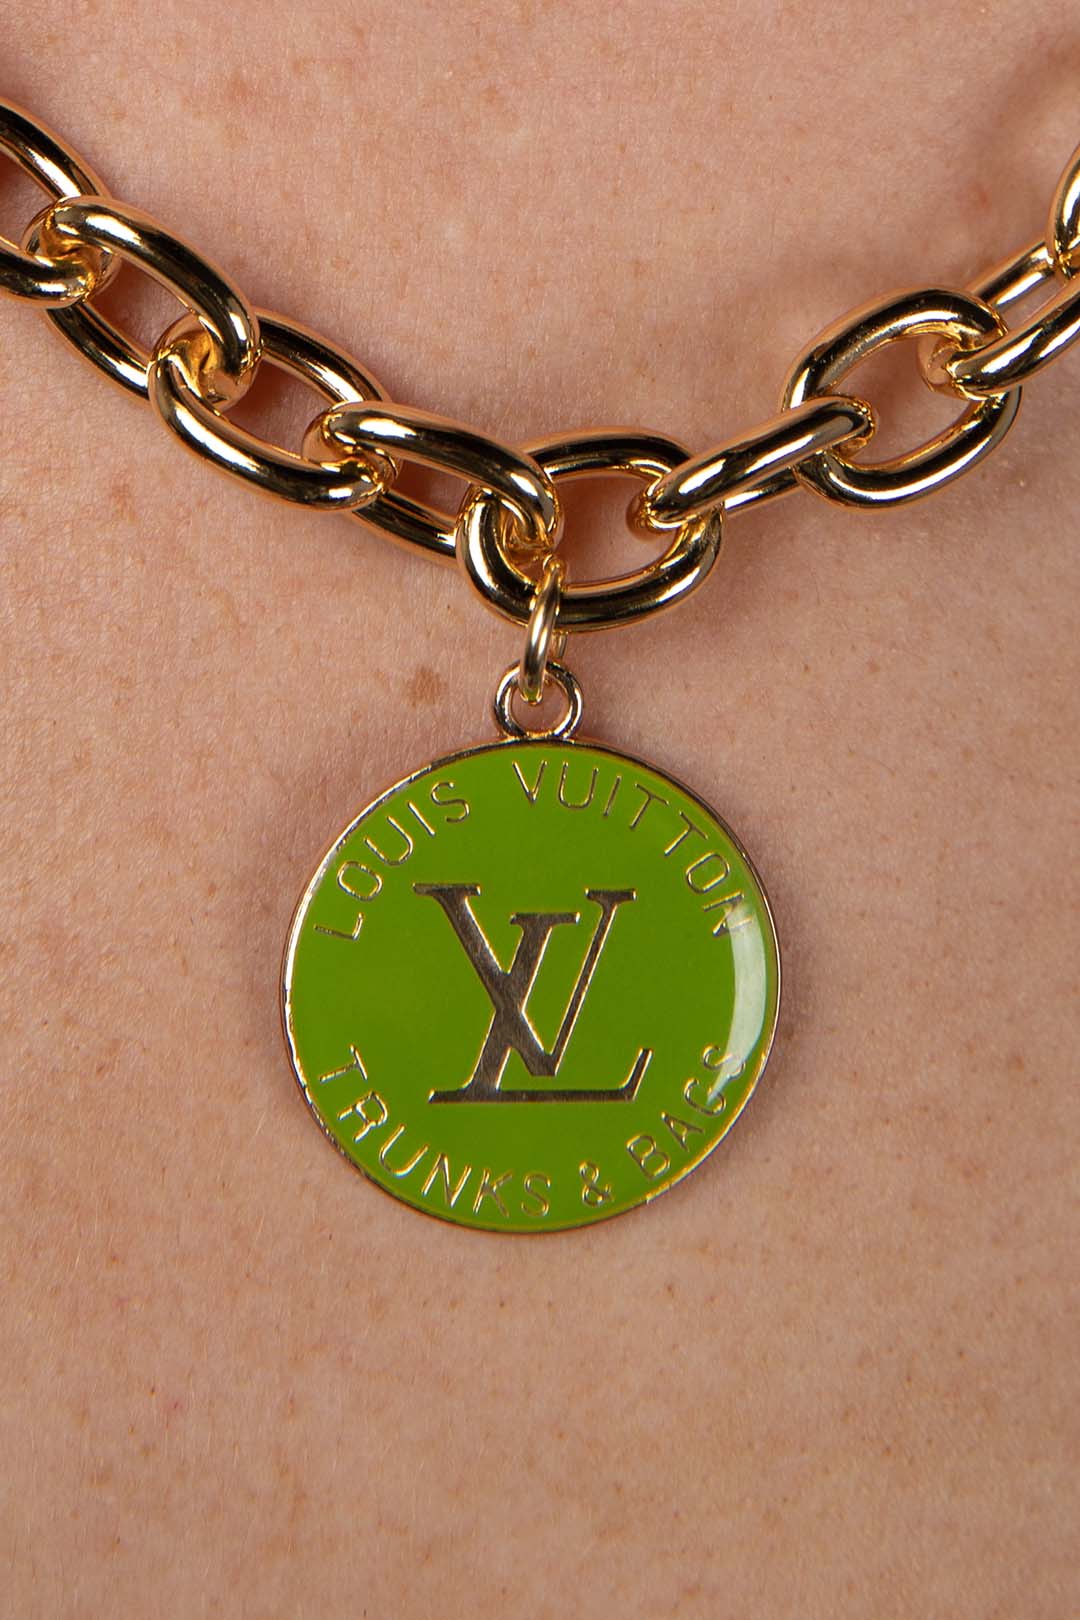 Louis Vuitton, Jewelry, Louis Vuitton Trunks Bags Charm Necklace